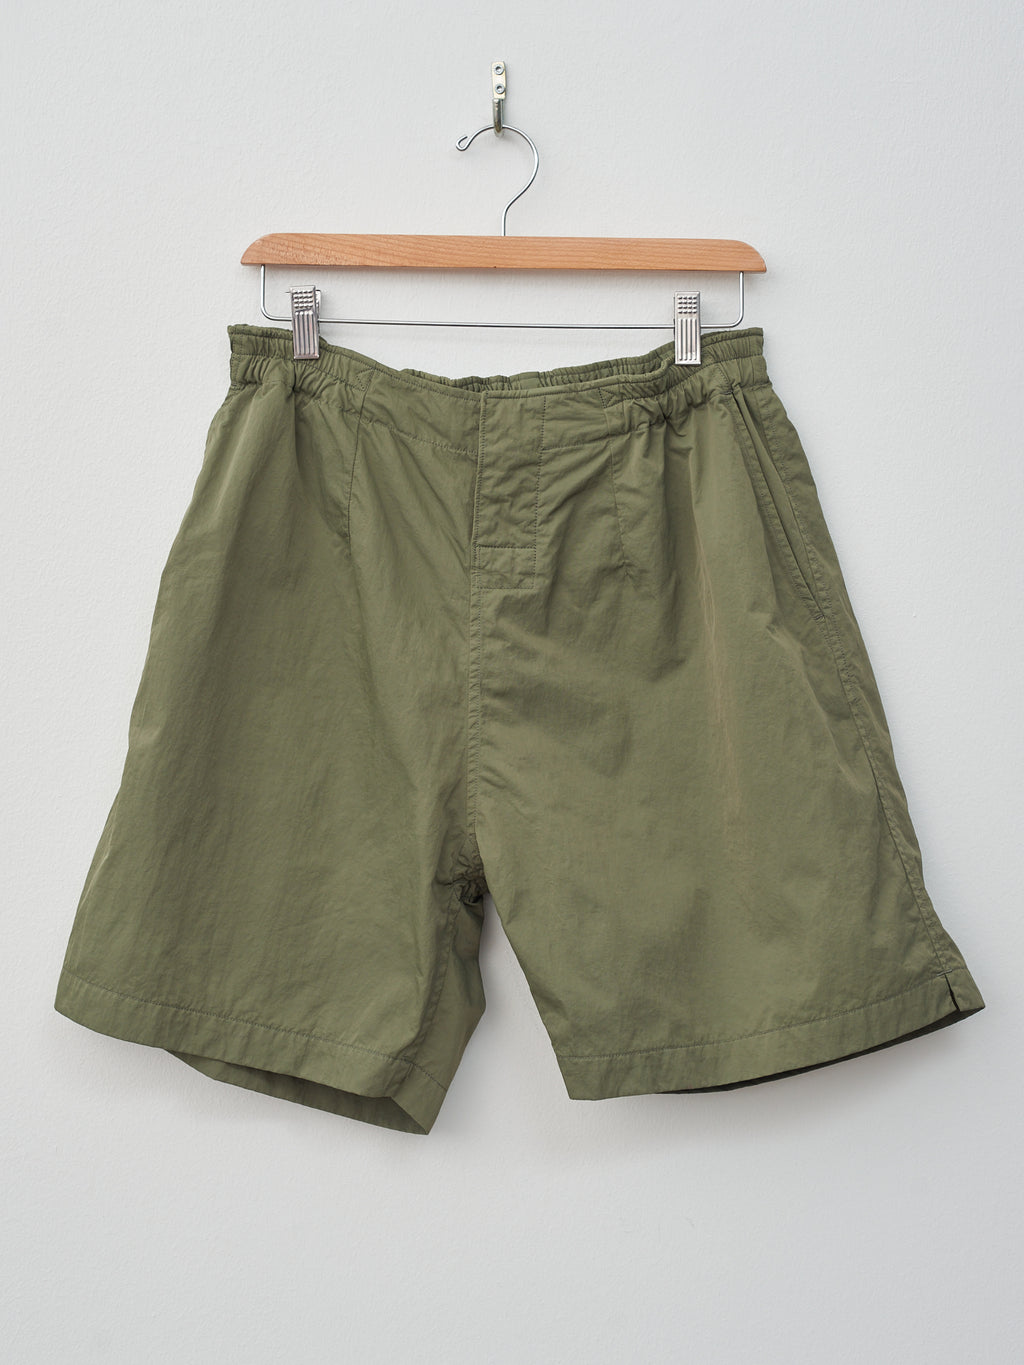 Namu Shop - Kaptain Sunshine Trainer Short Pants - Olive